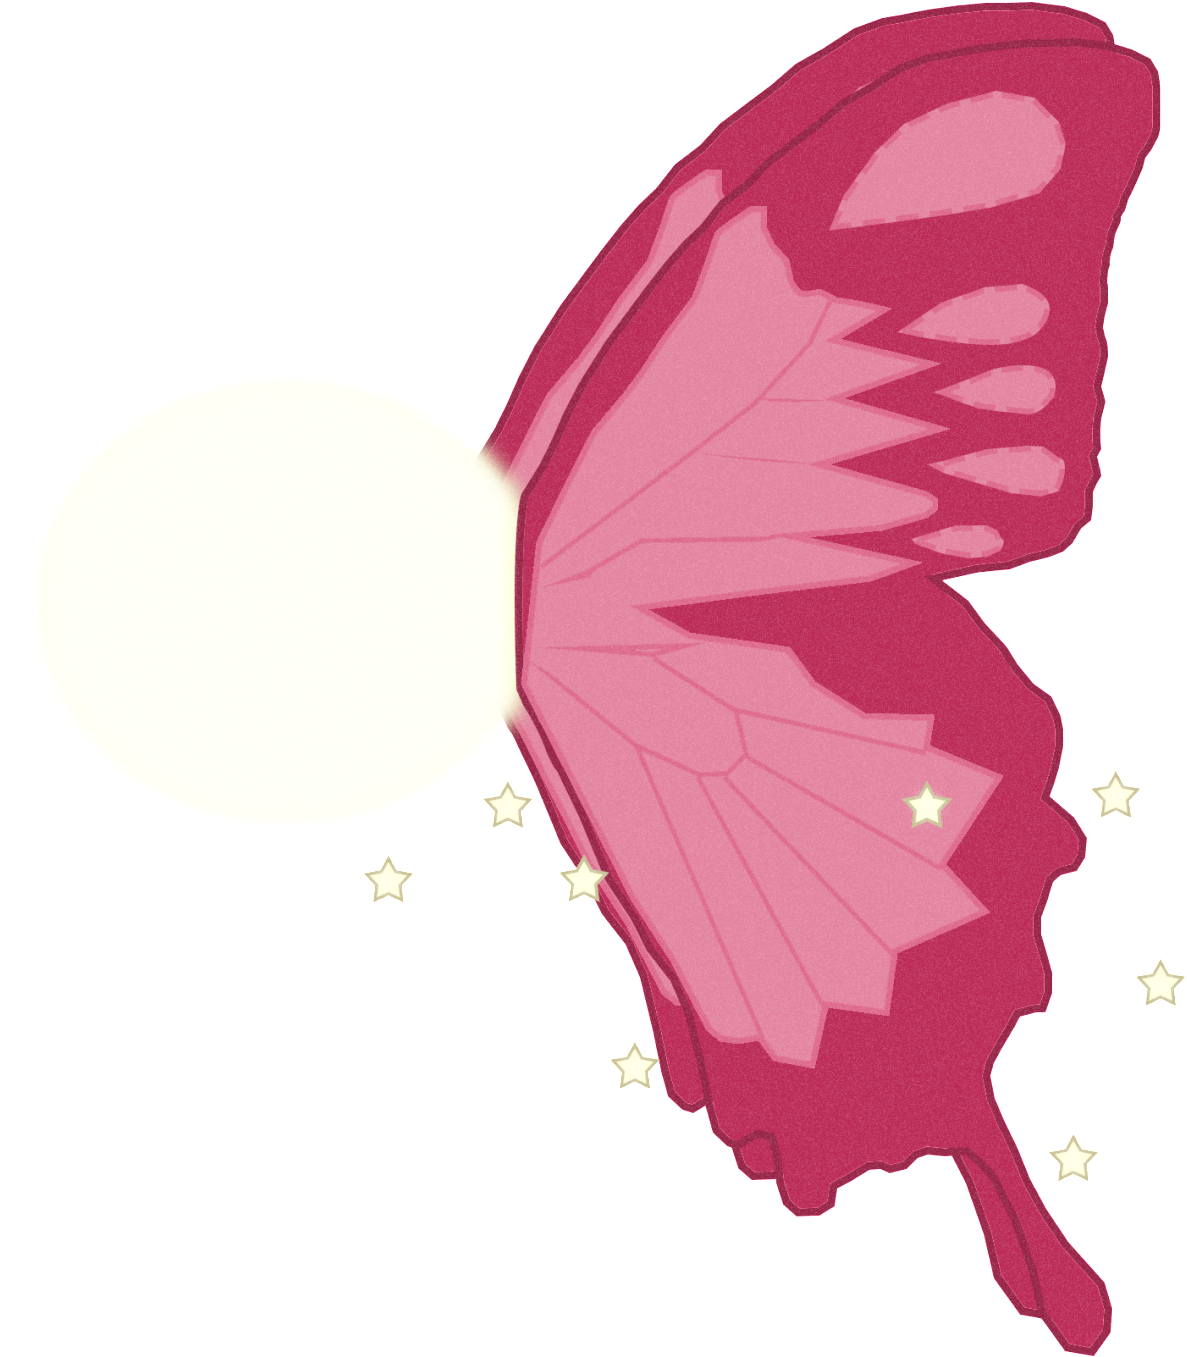 Cqlqfql ] - Ulysses Butterfly (1524x1401)